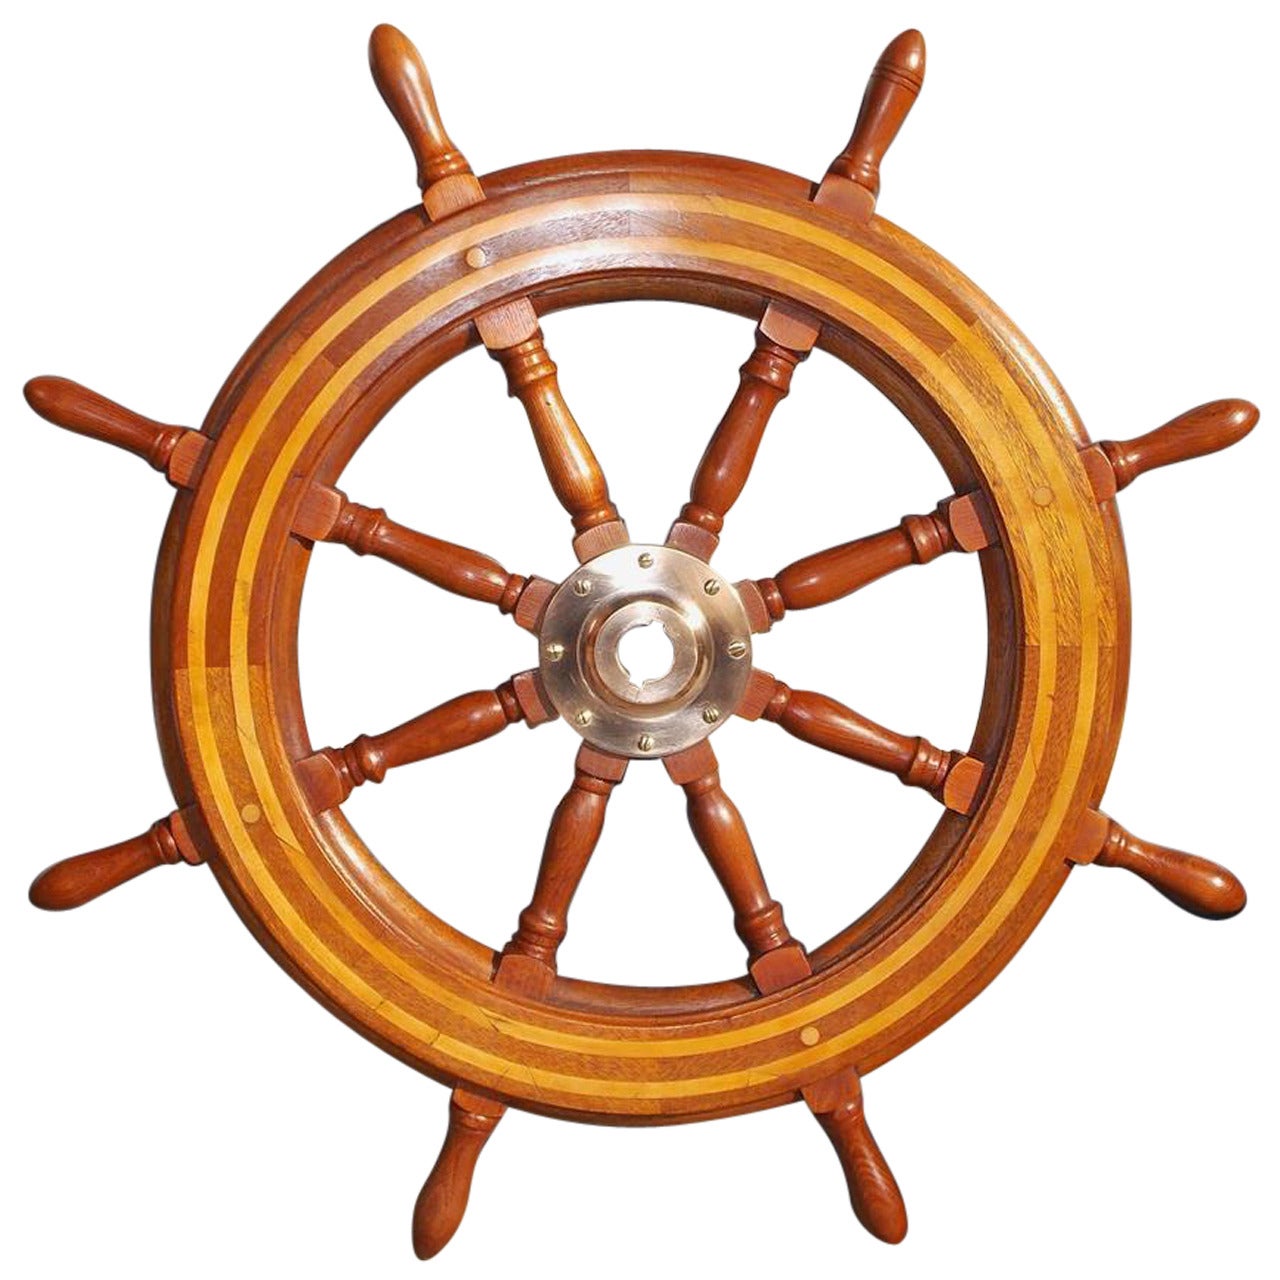 American Walnut and Maple Inlaid Ships Wheel. Circa 1850